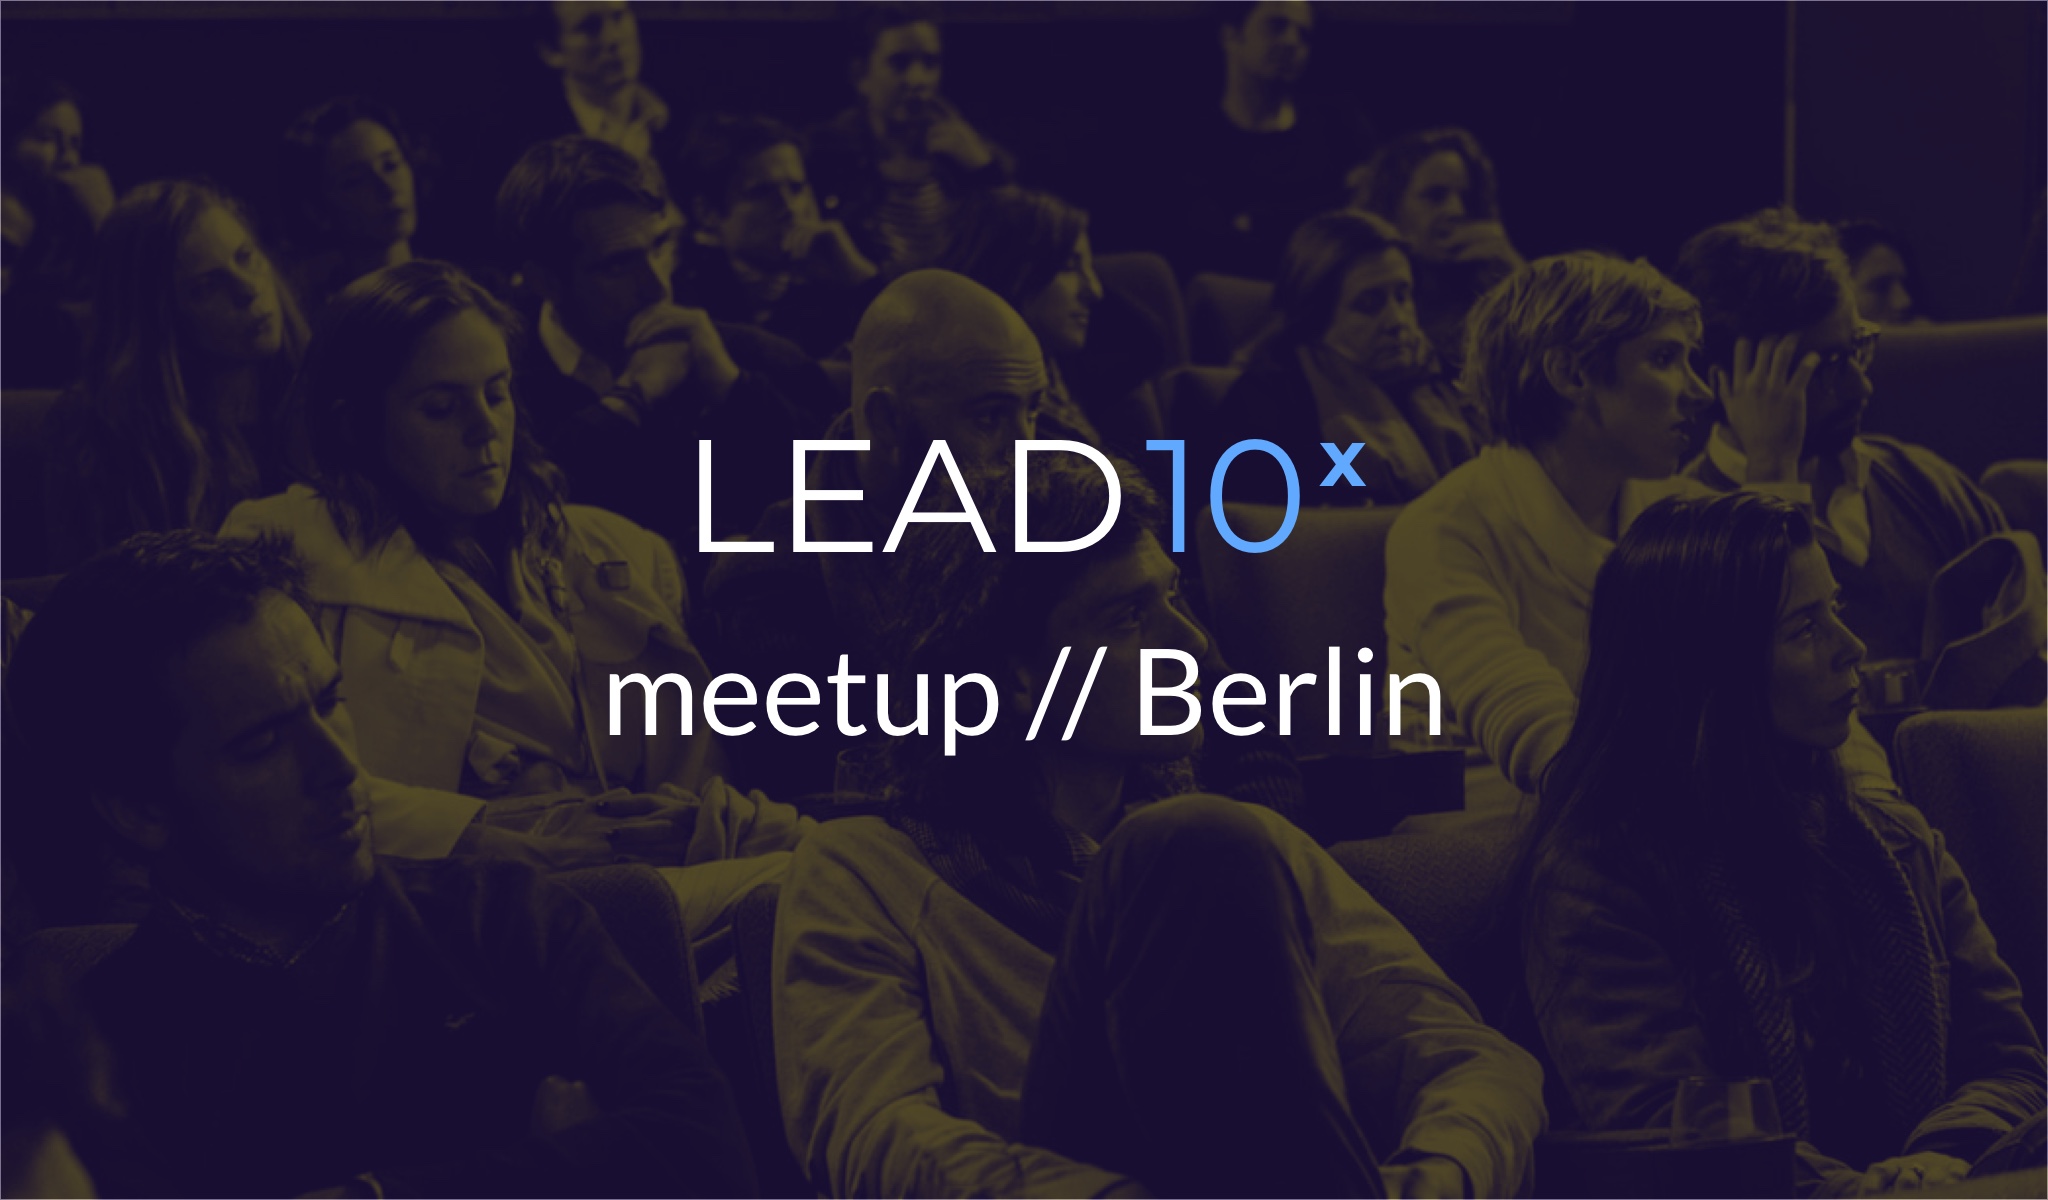 Introducing Lead10x: alternative thinking on leadership